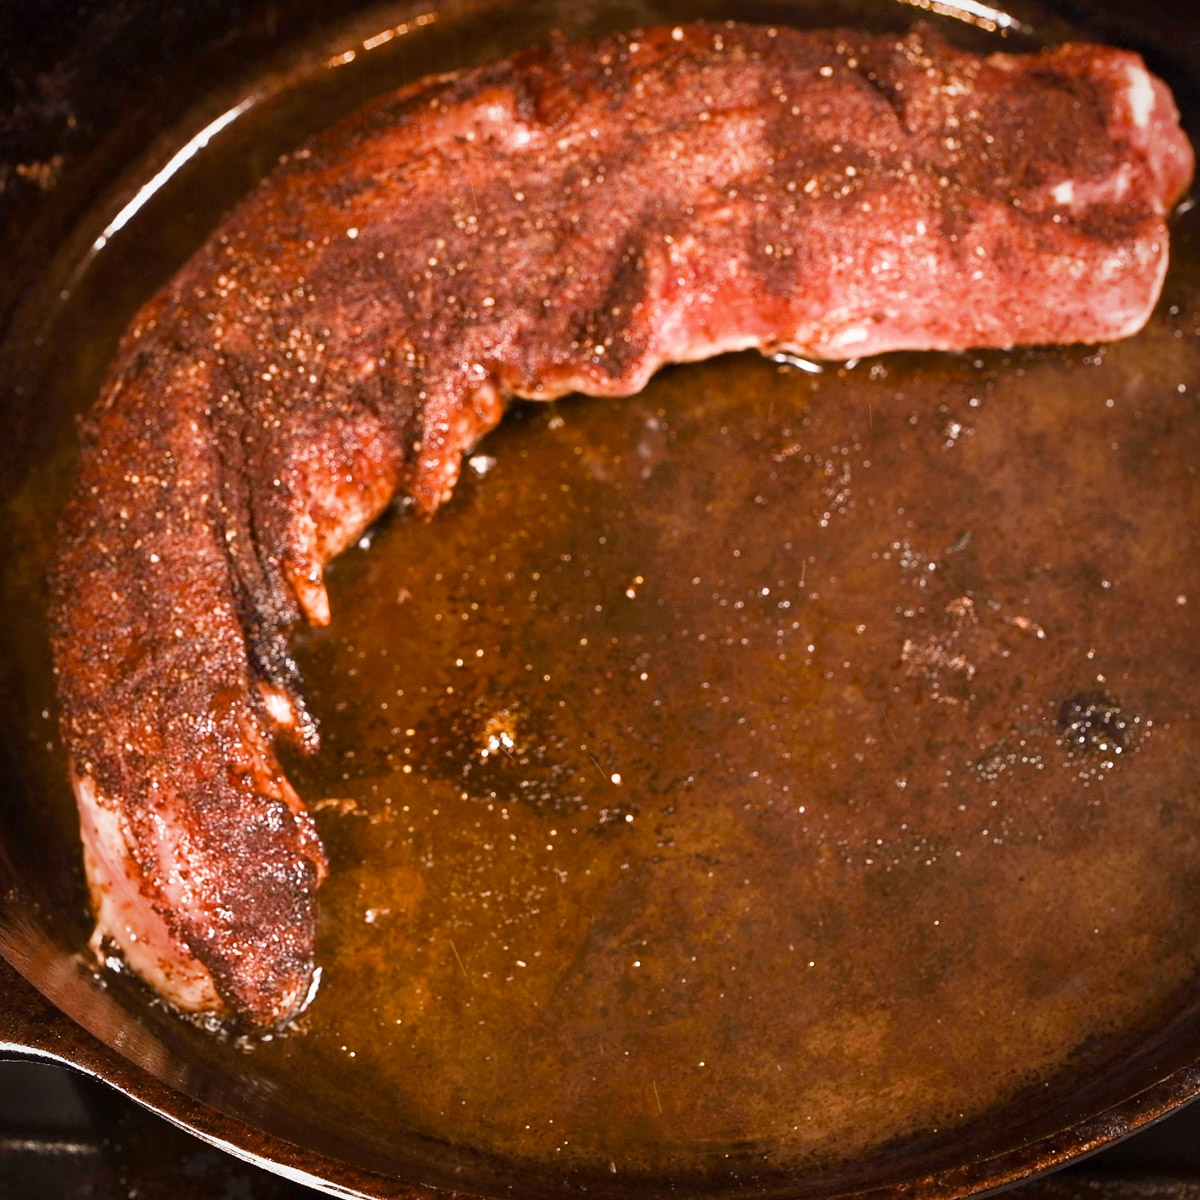 Sear both side of the pork tenderloin in a cast iron skillet.